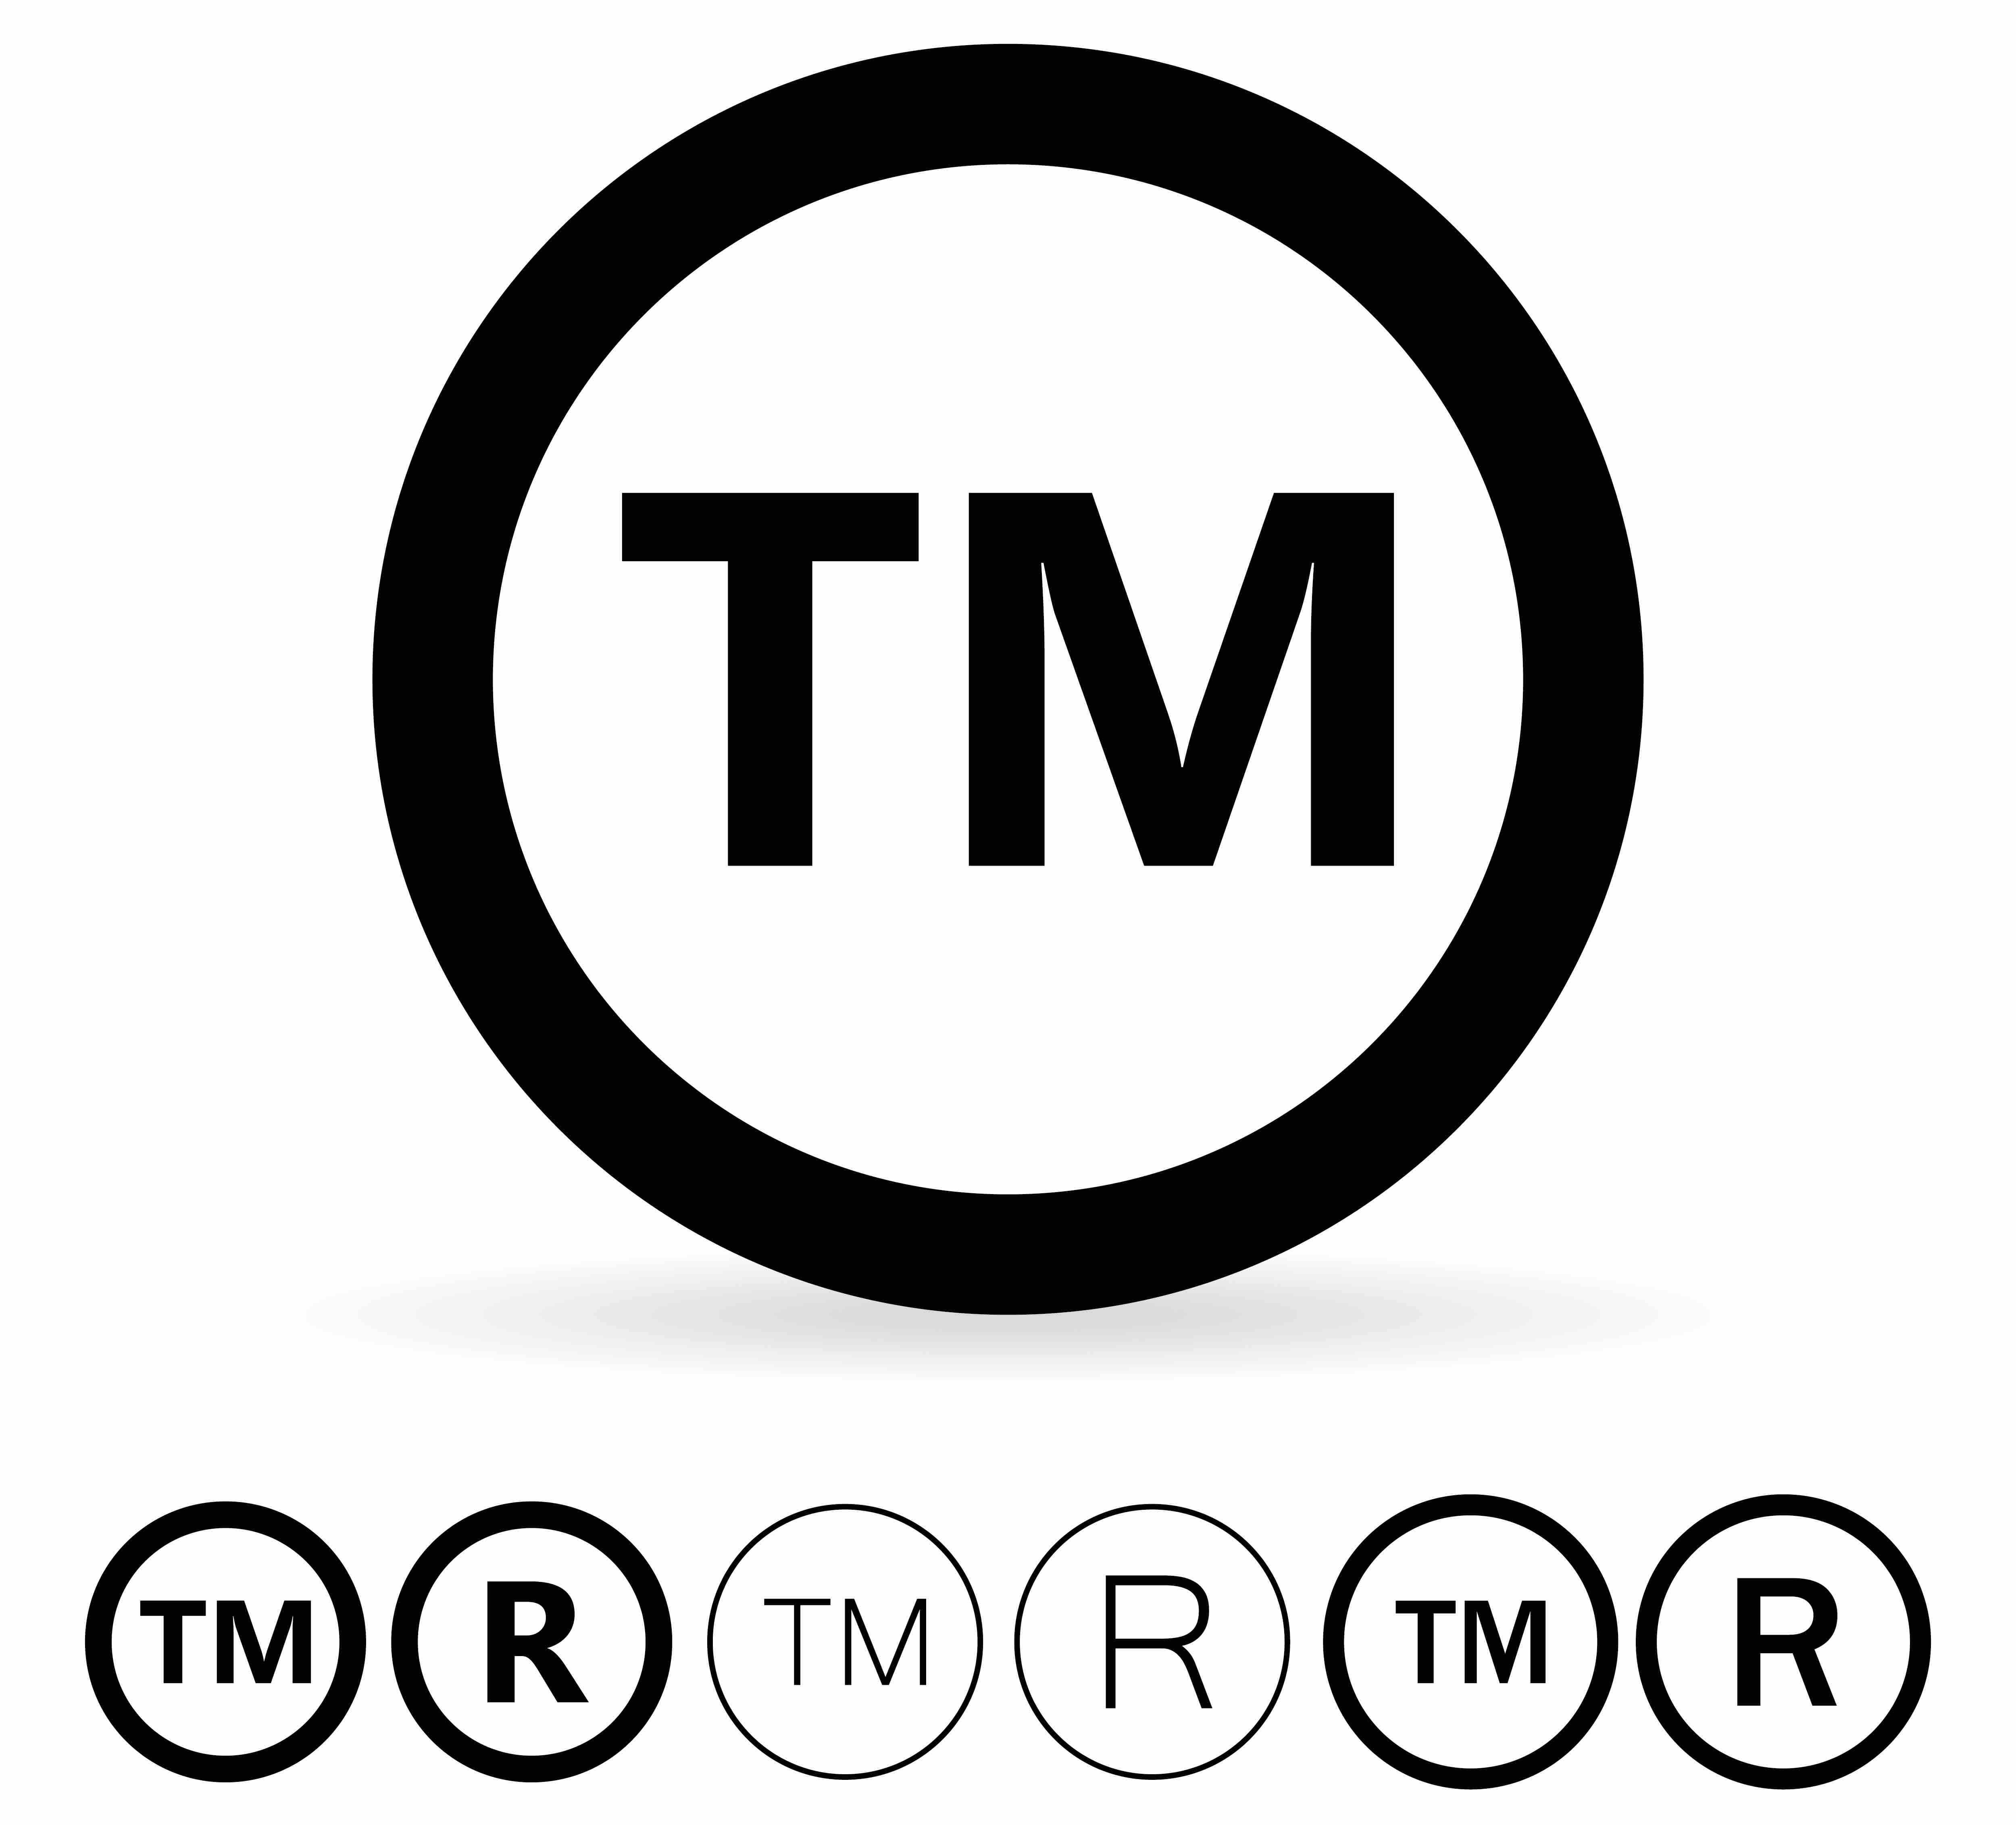 Registered Logo - How to use trademark and registered trademark symbols